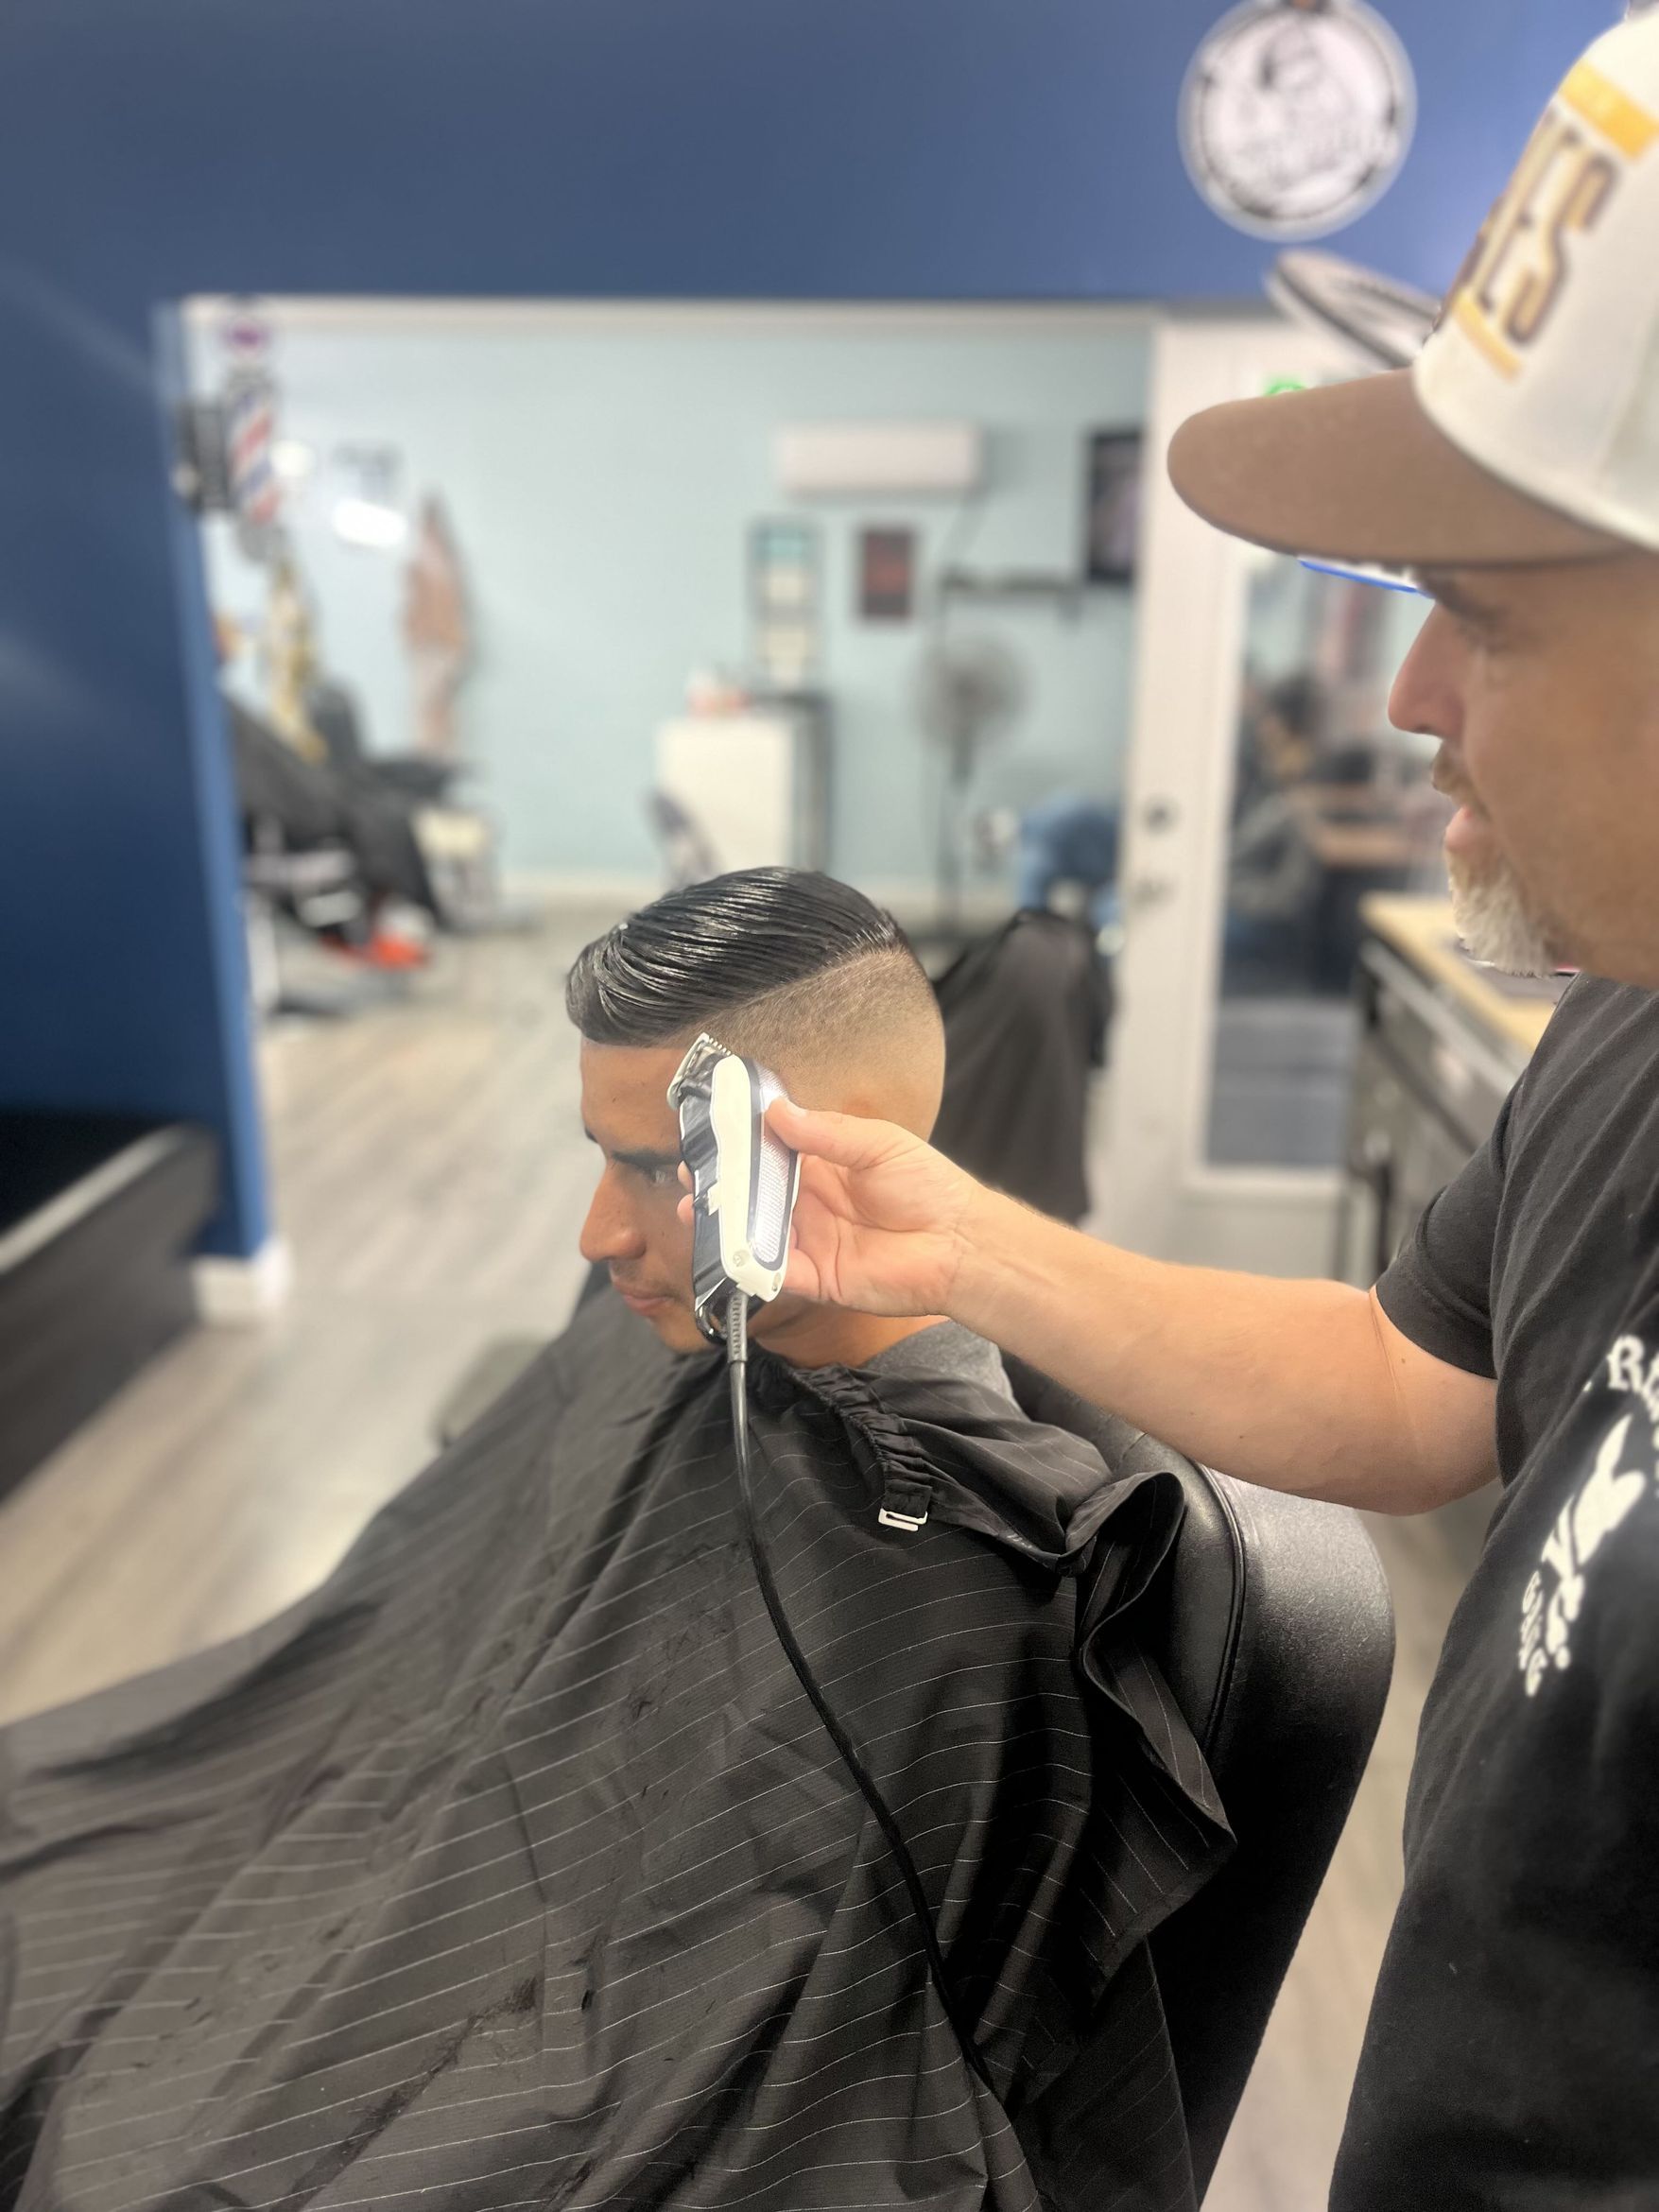 Danny - MoFadez  barbershop